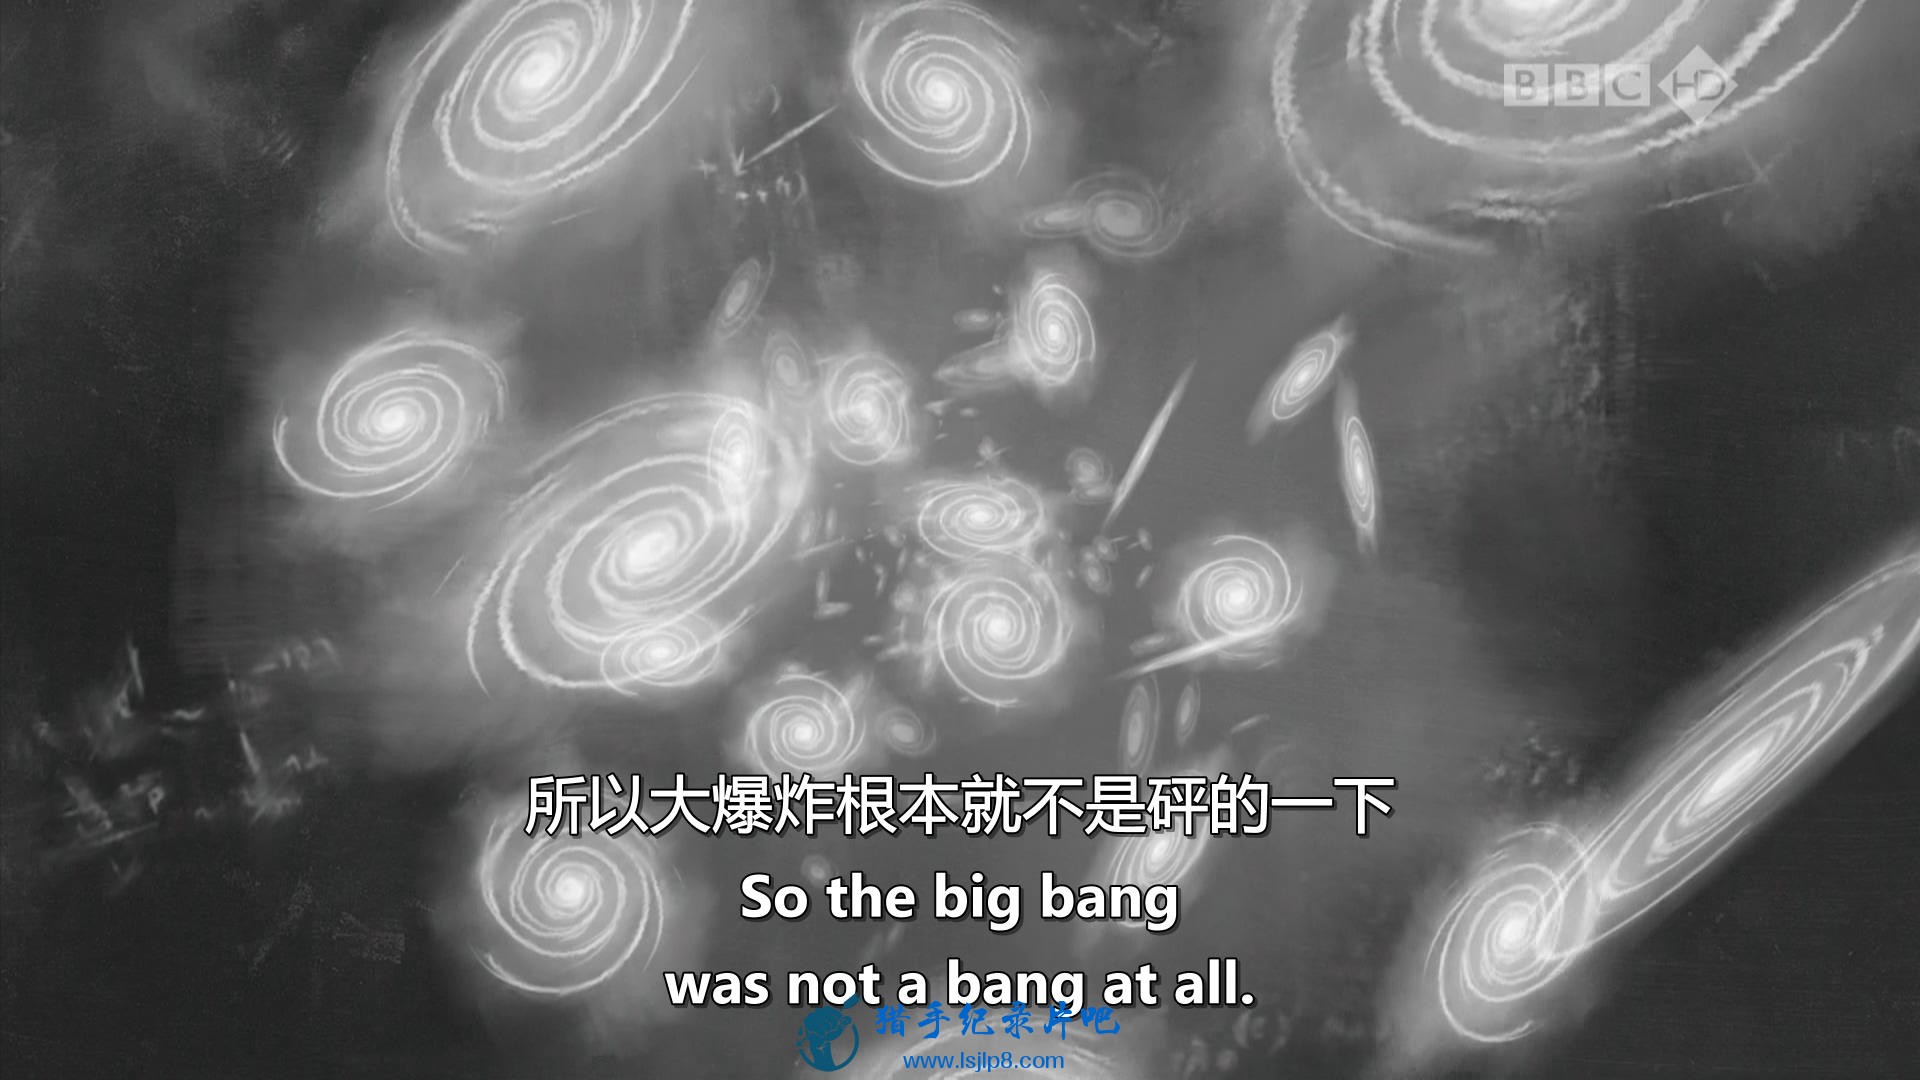 What.Happened.Before.the.Big.Bang.(2010).1080i.HDTV.2xRus.Eng-BLUEBIRD.ts_202007.jpg